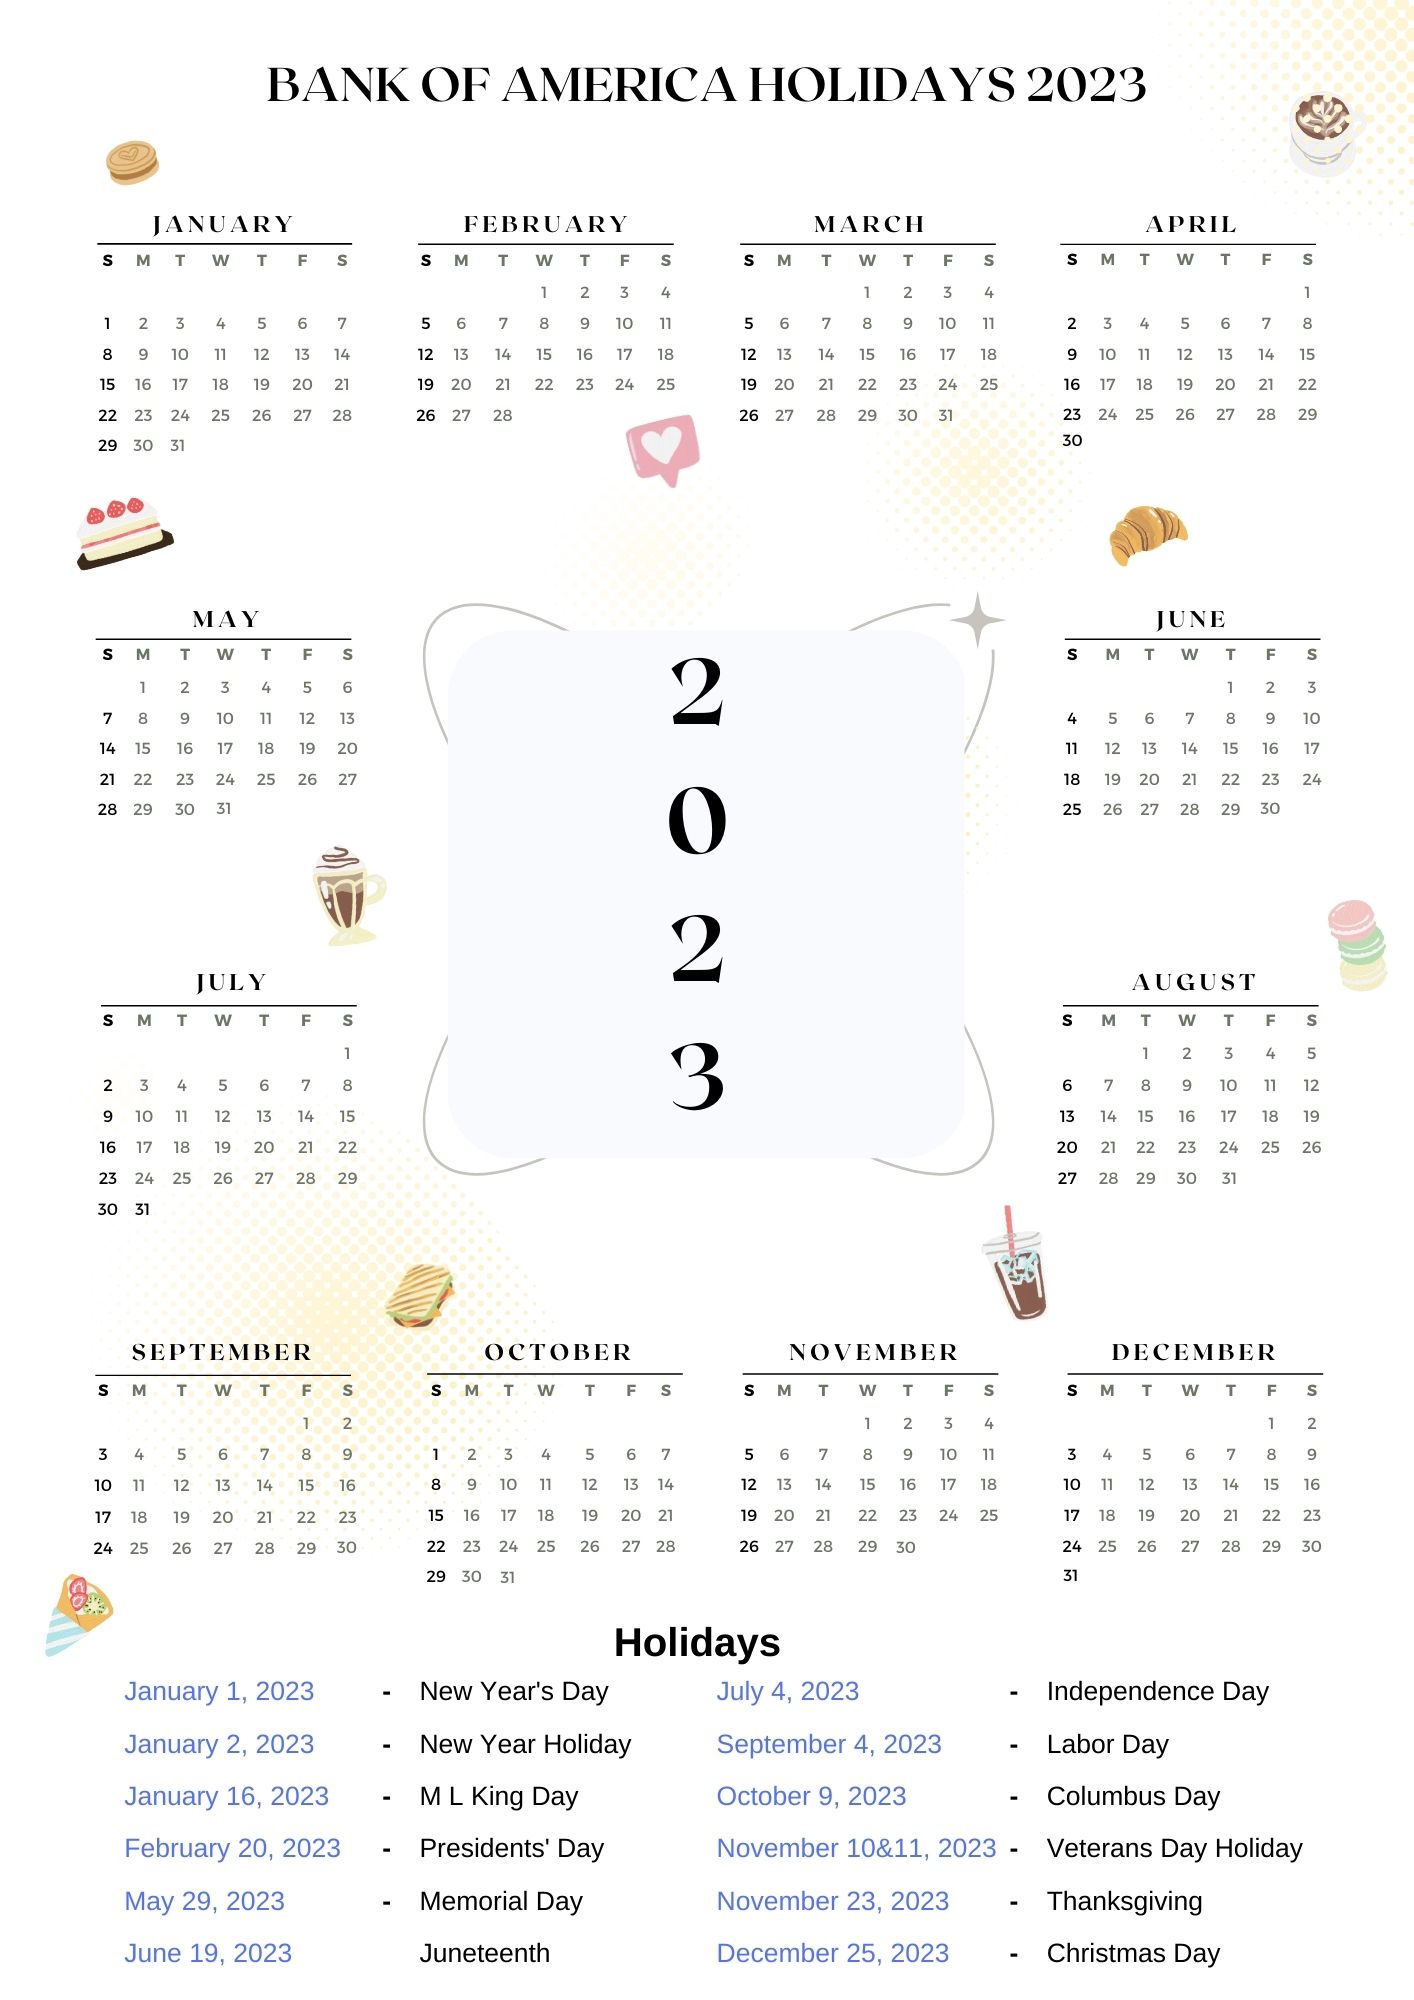 Bank of America Holidays 2023 with Bank of America Calendar